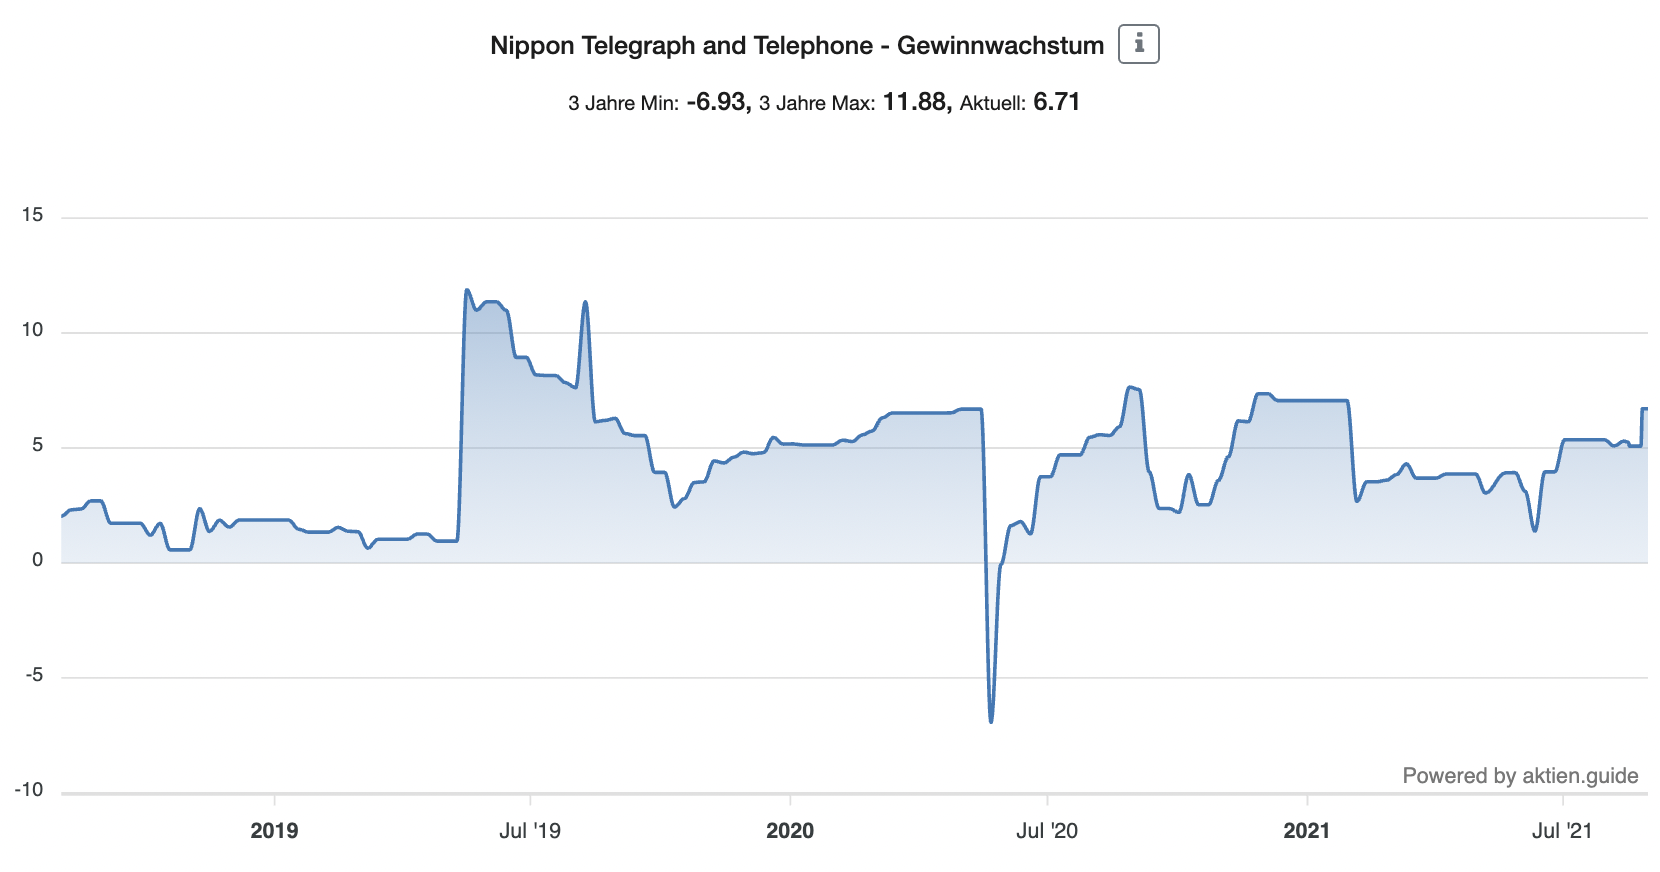 Nippon Telegraph and Telephone Gewinnwachstum